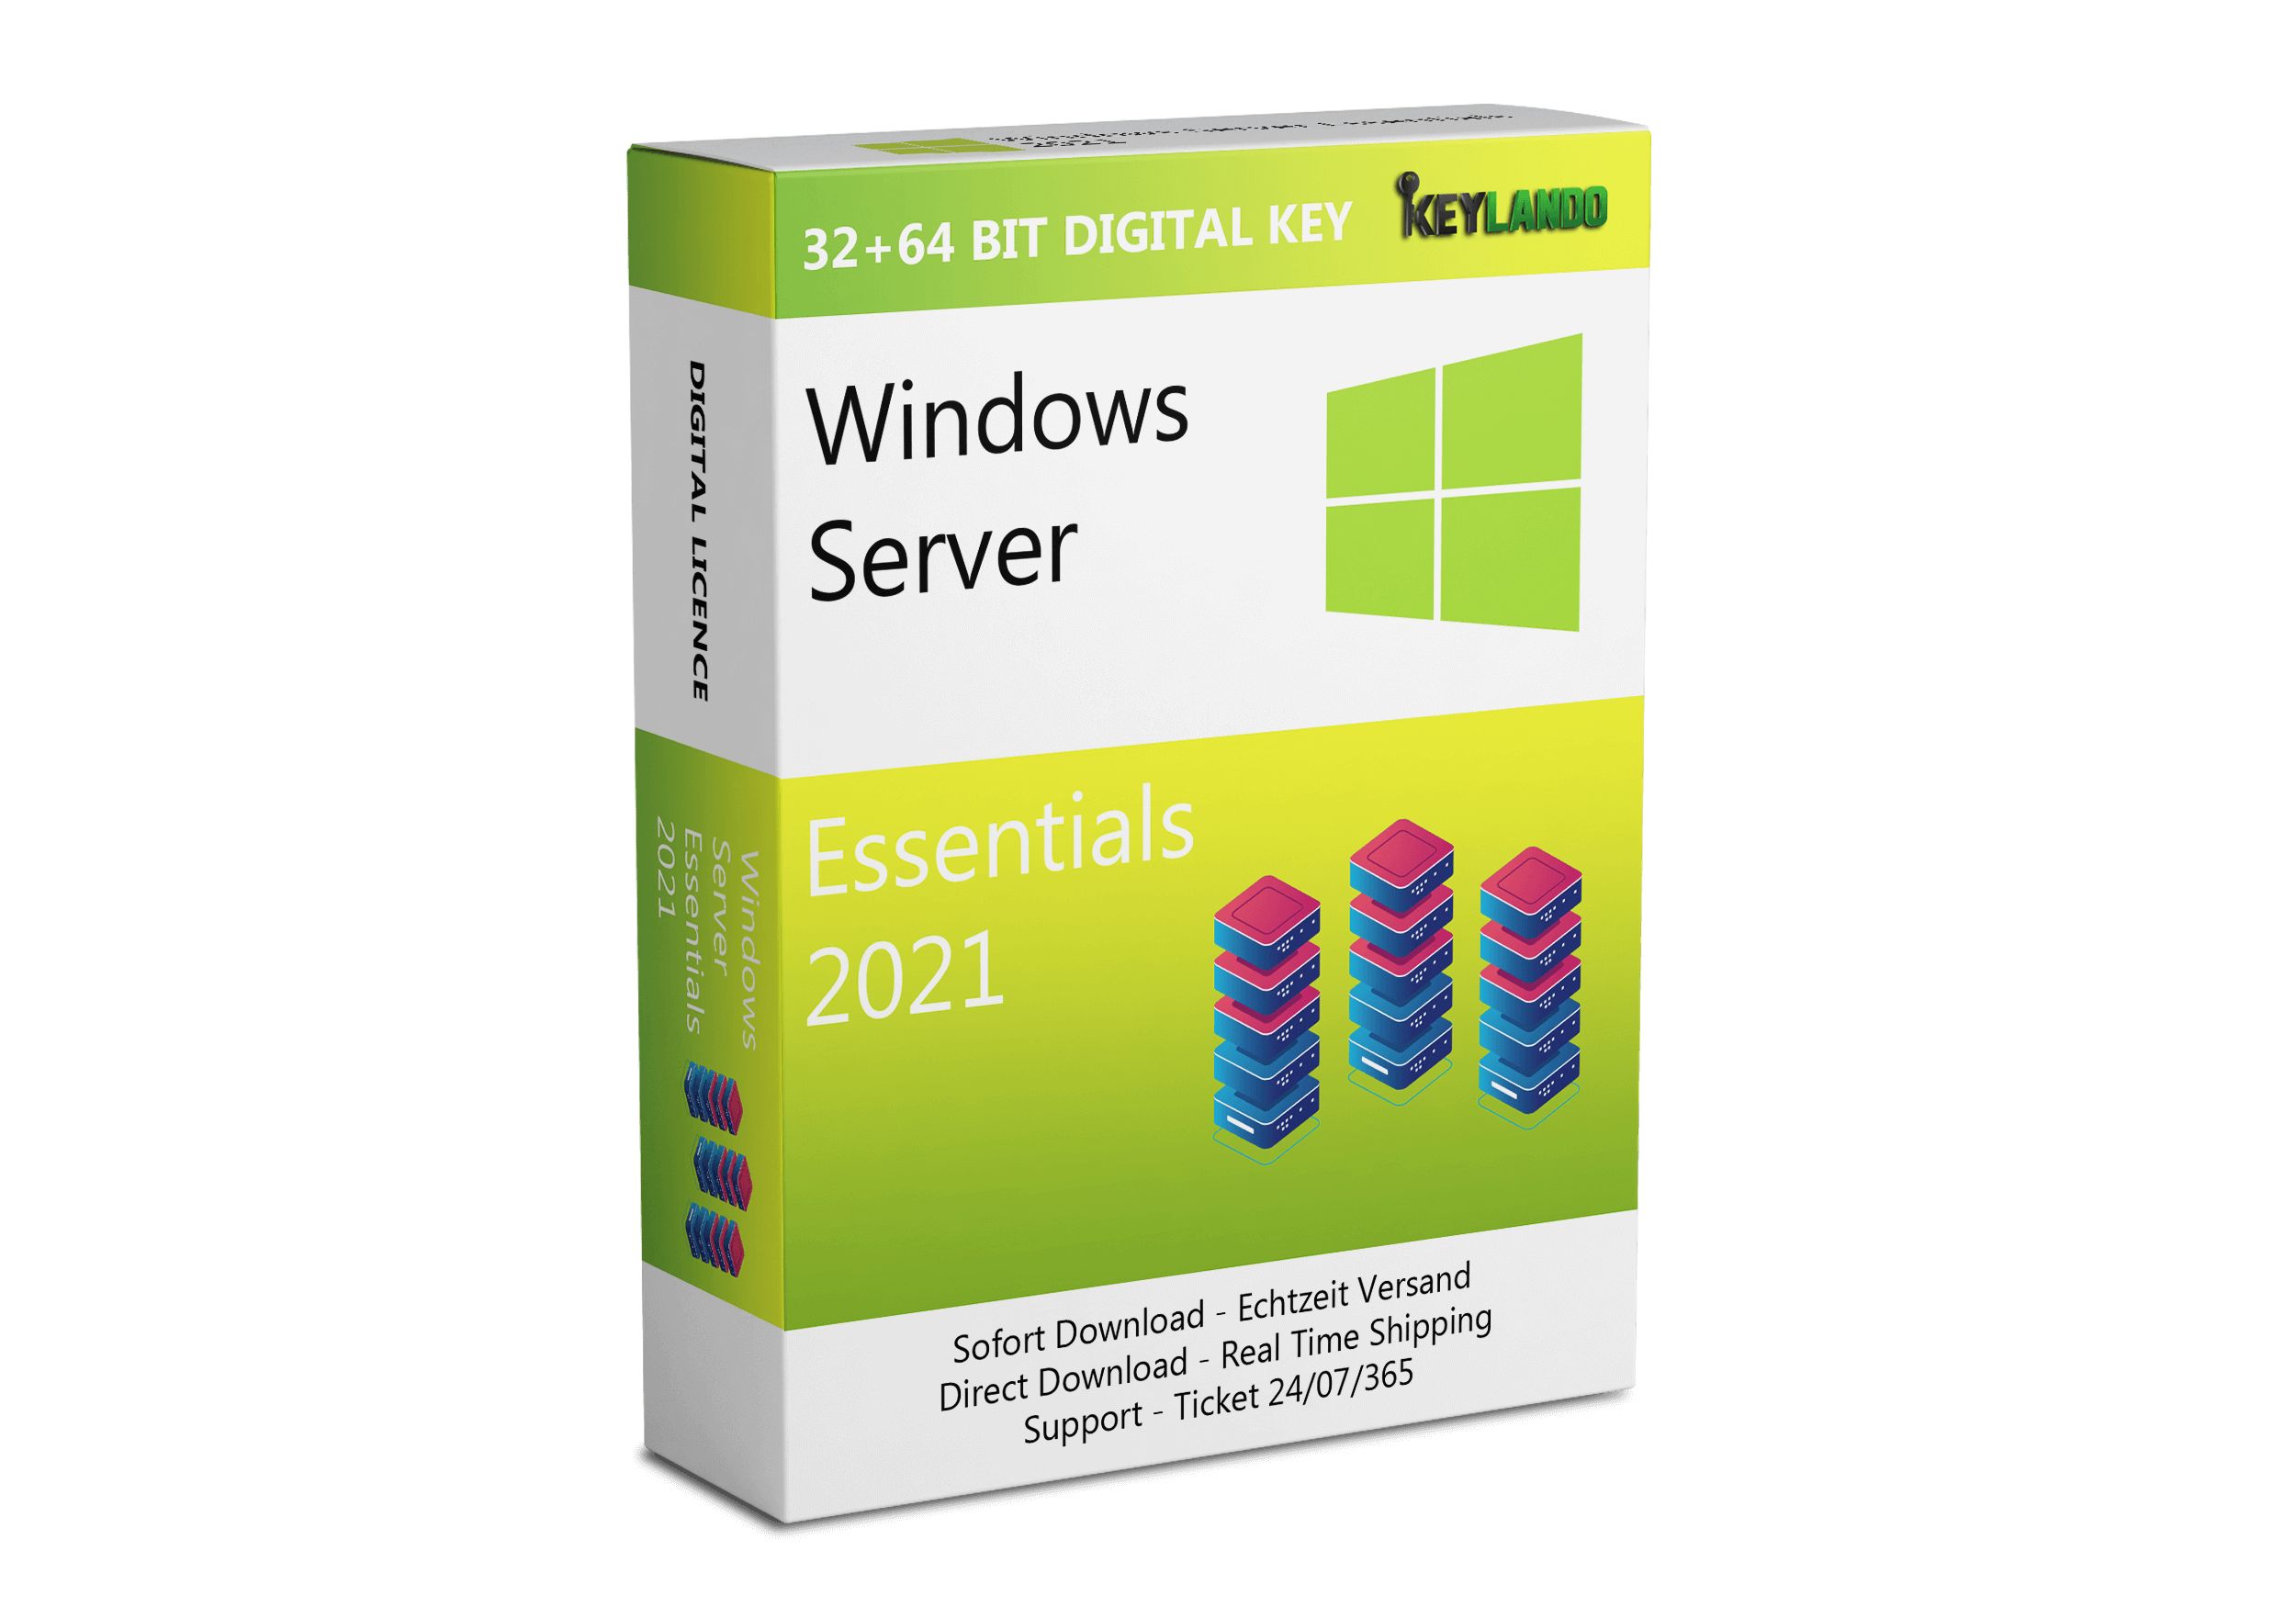 Windows Server 2021 Essentials